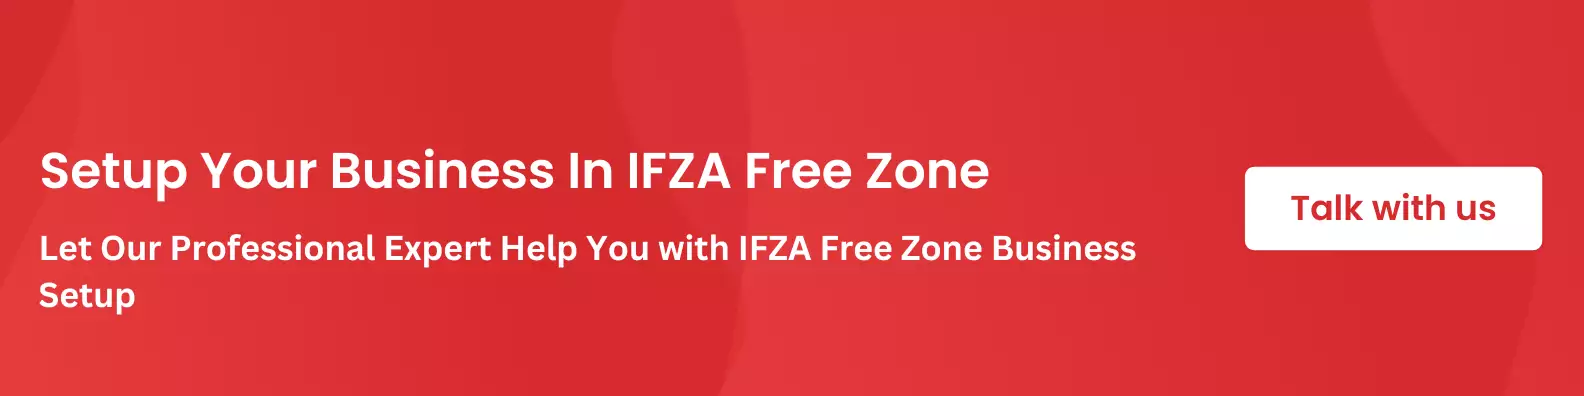 IFZA-Free-Zone